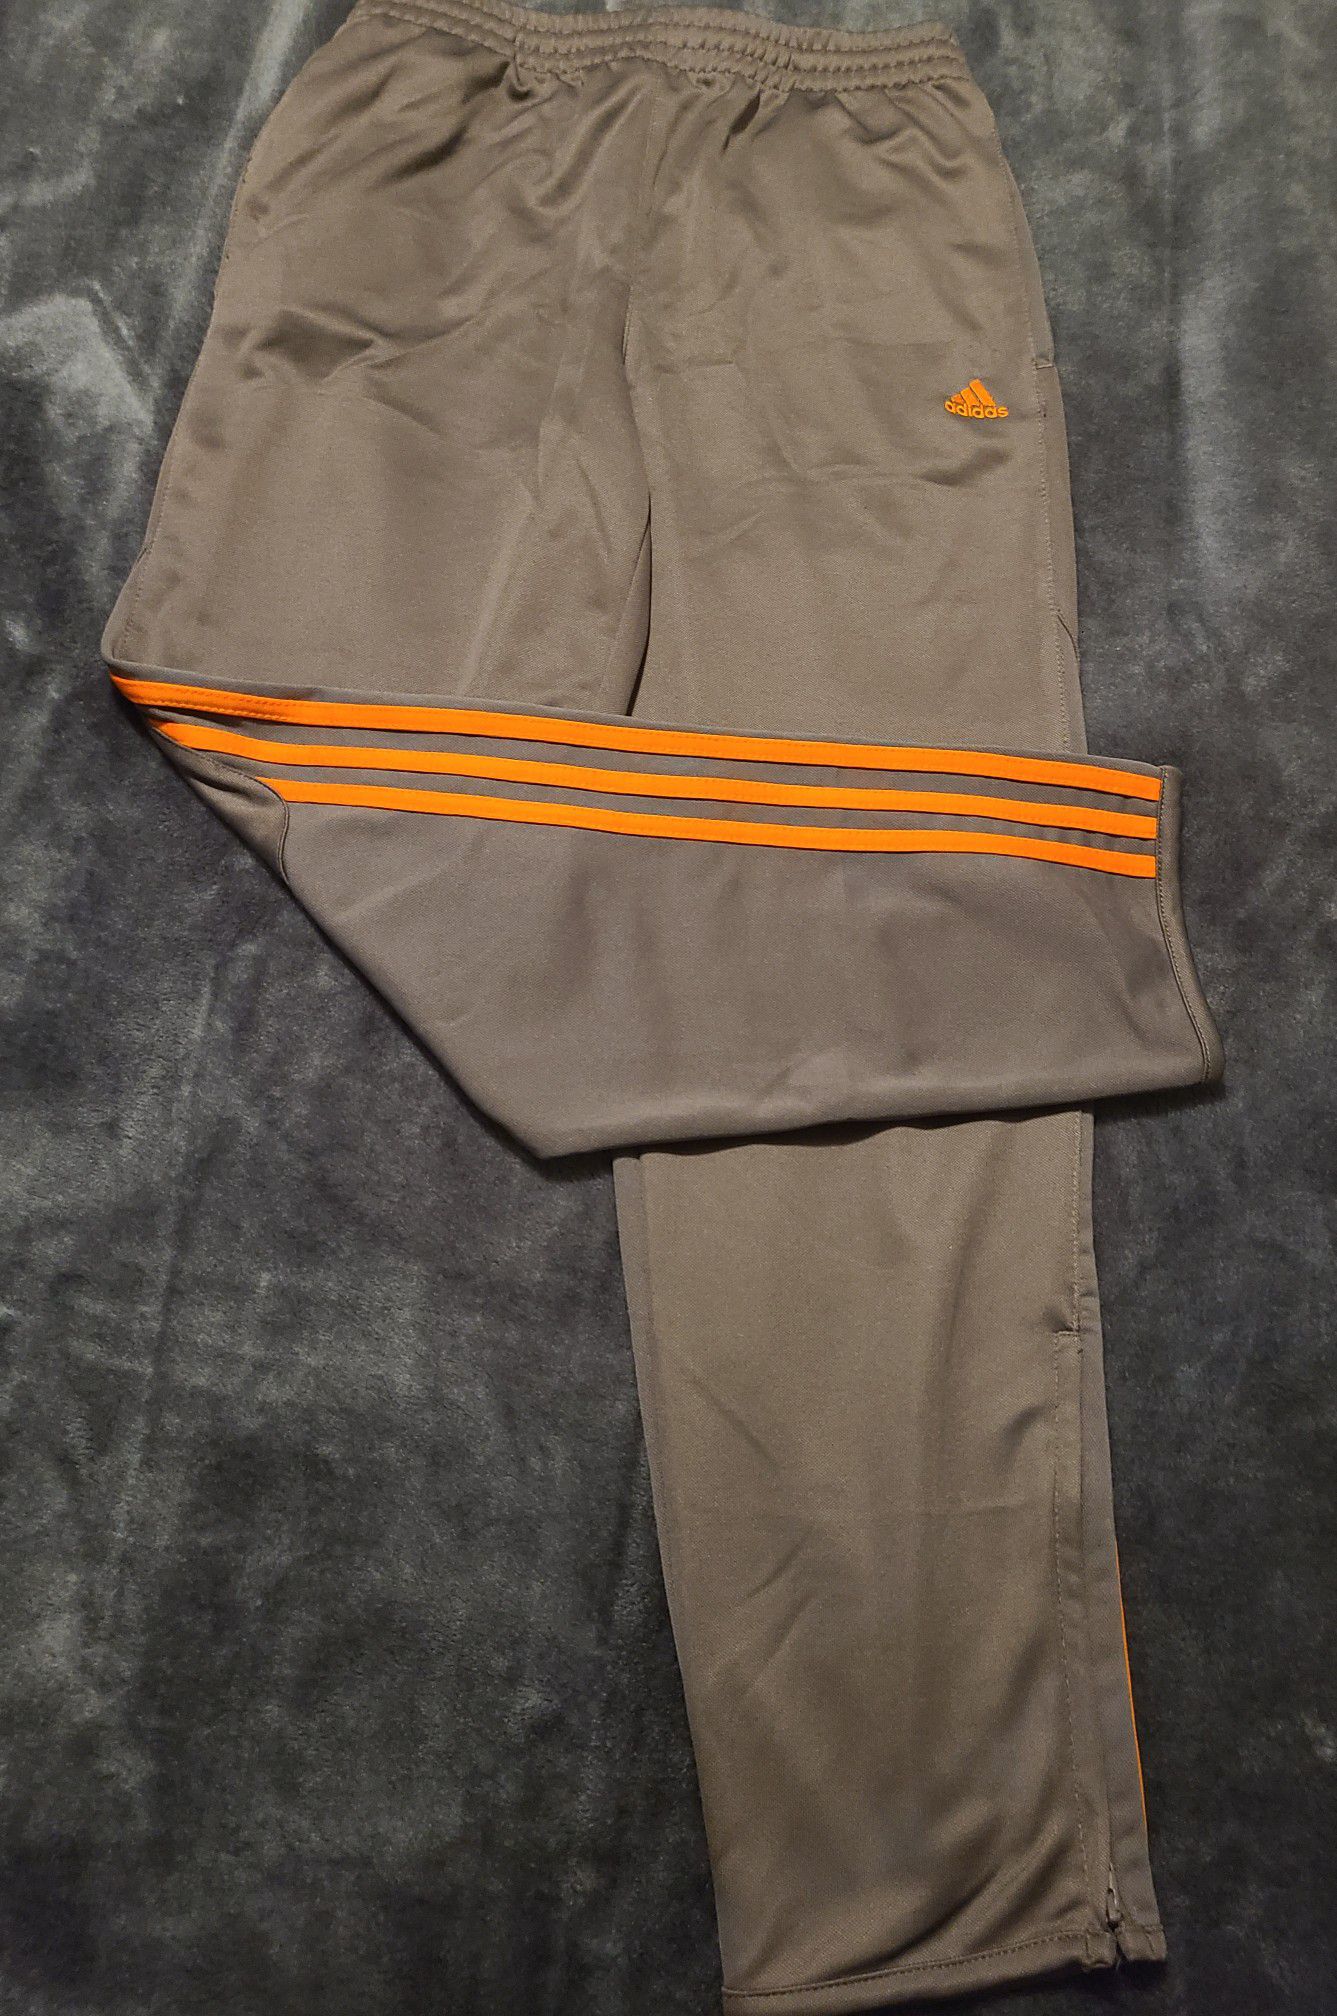 Adidas pants size 14/16